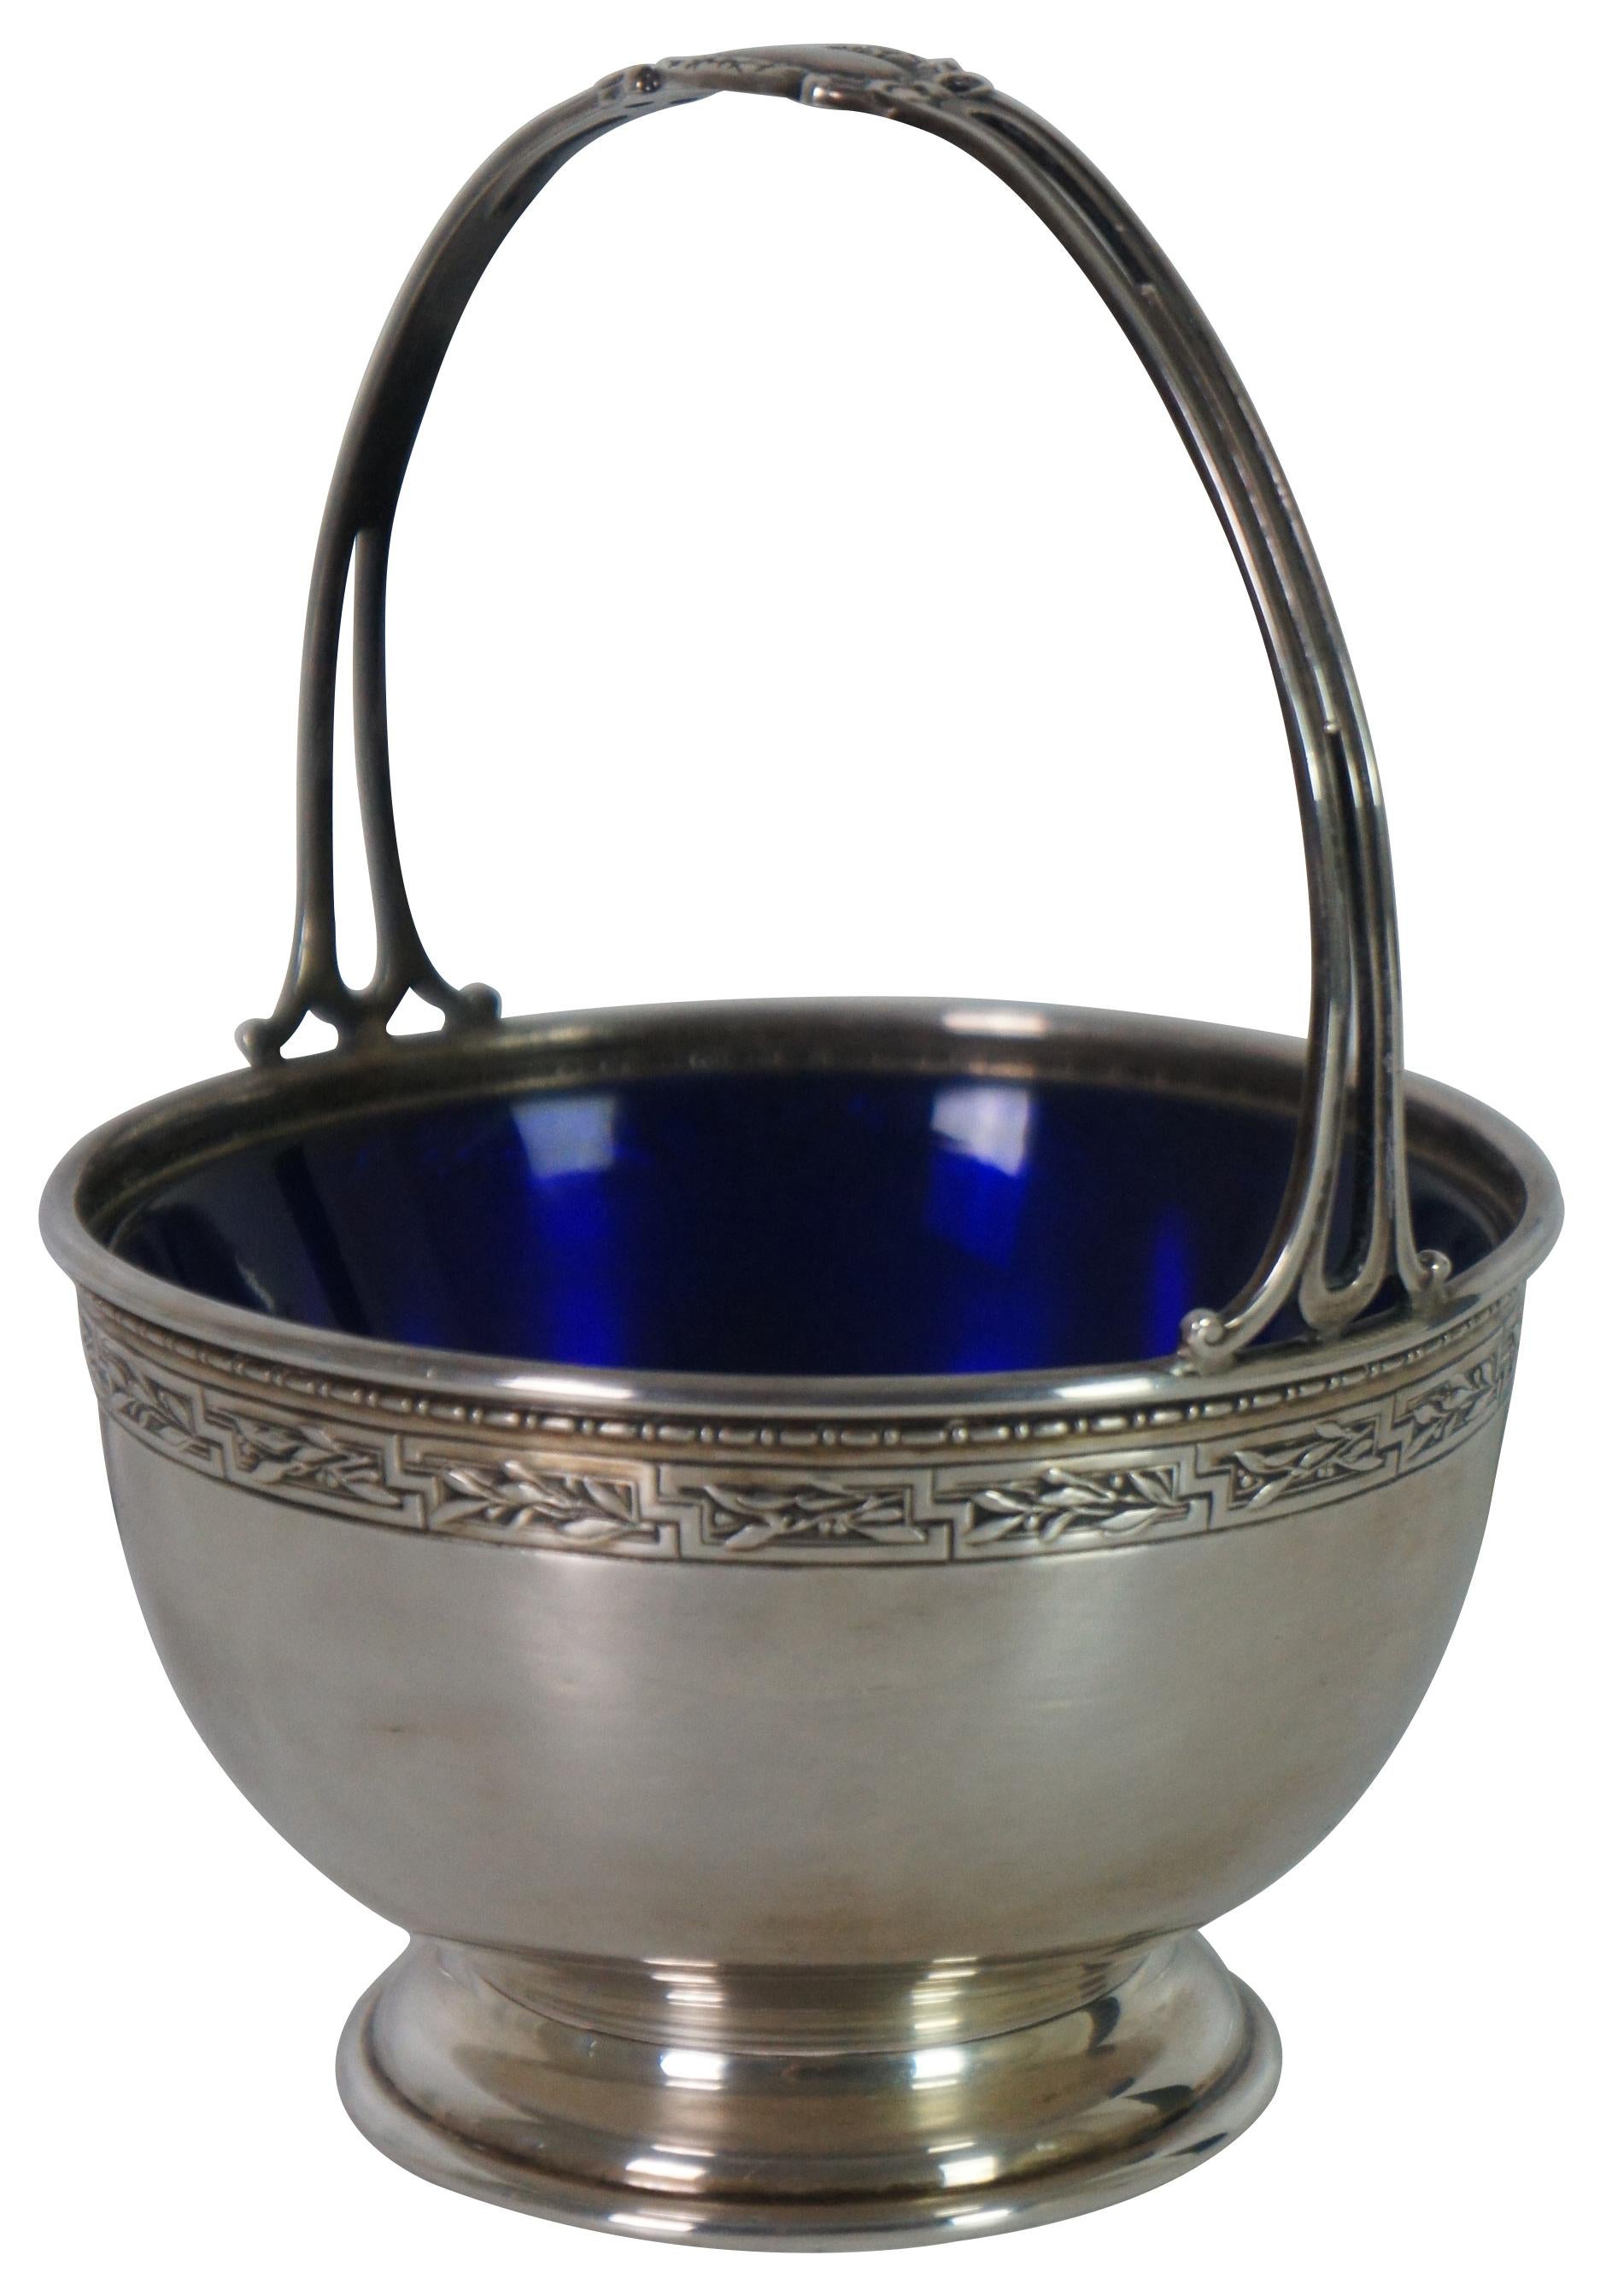 Antique Gorham sterling silver, number 103, pedestal basket with handle and cobalt blue sugar dish / bowl insert.

Measures: 4.5” x 4.125” x 5.75” / 133.9 g (Width x Depth x Height).